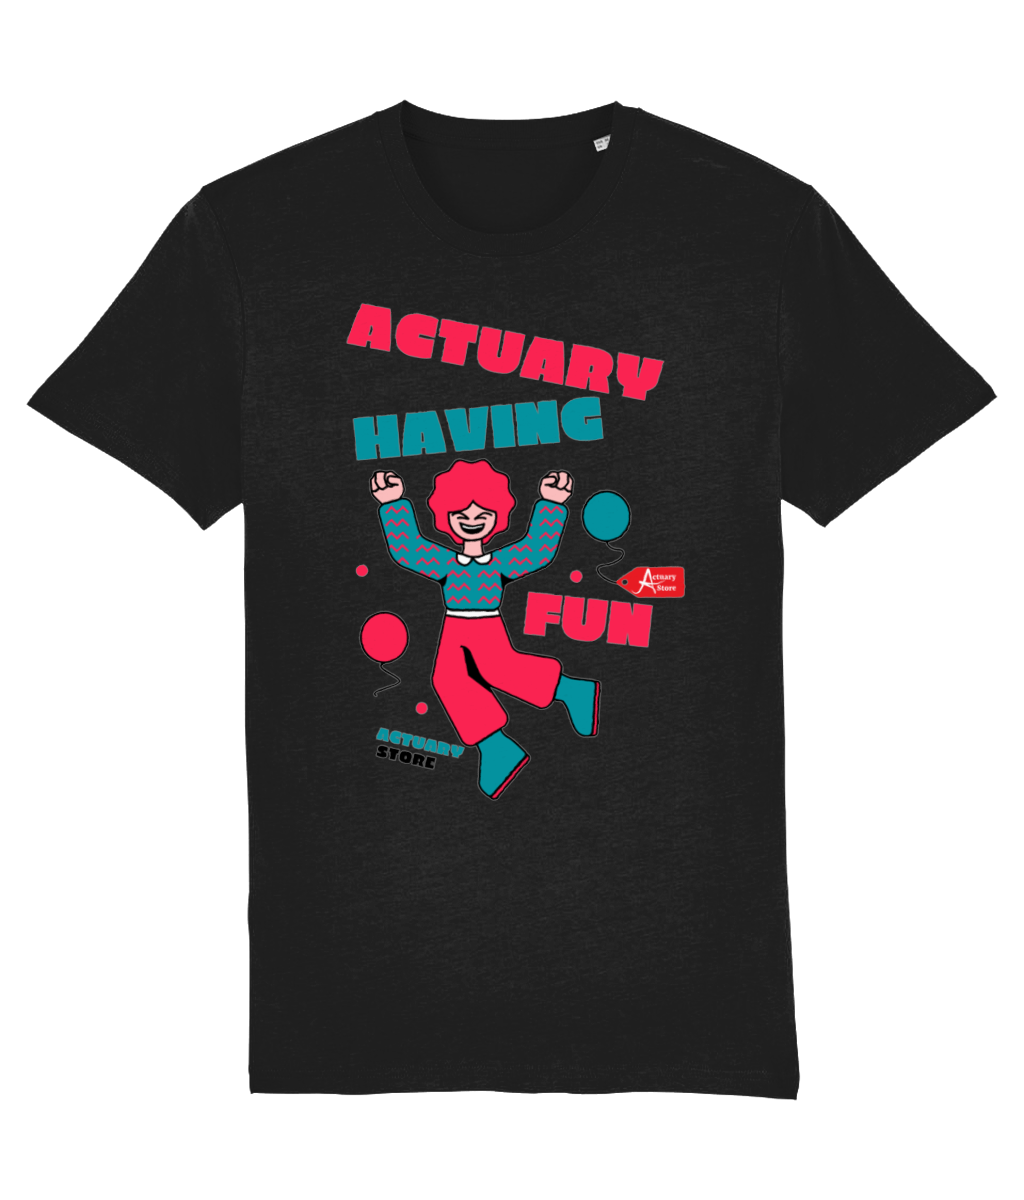 Actuary Having Fun T-Shirt (Black and White variants)